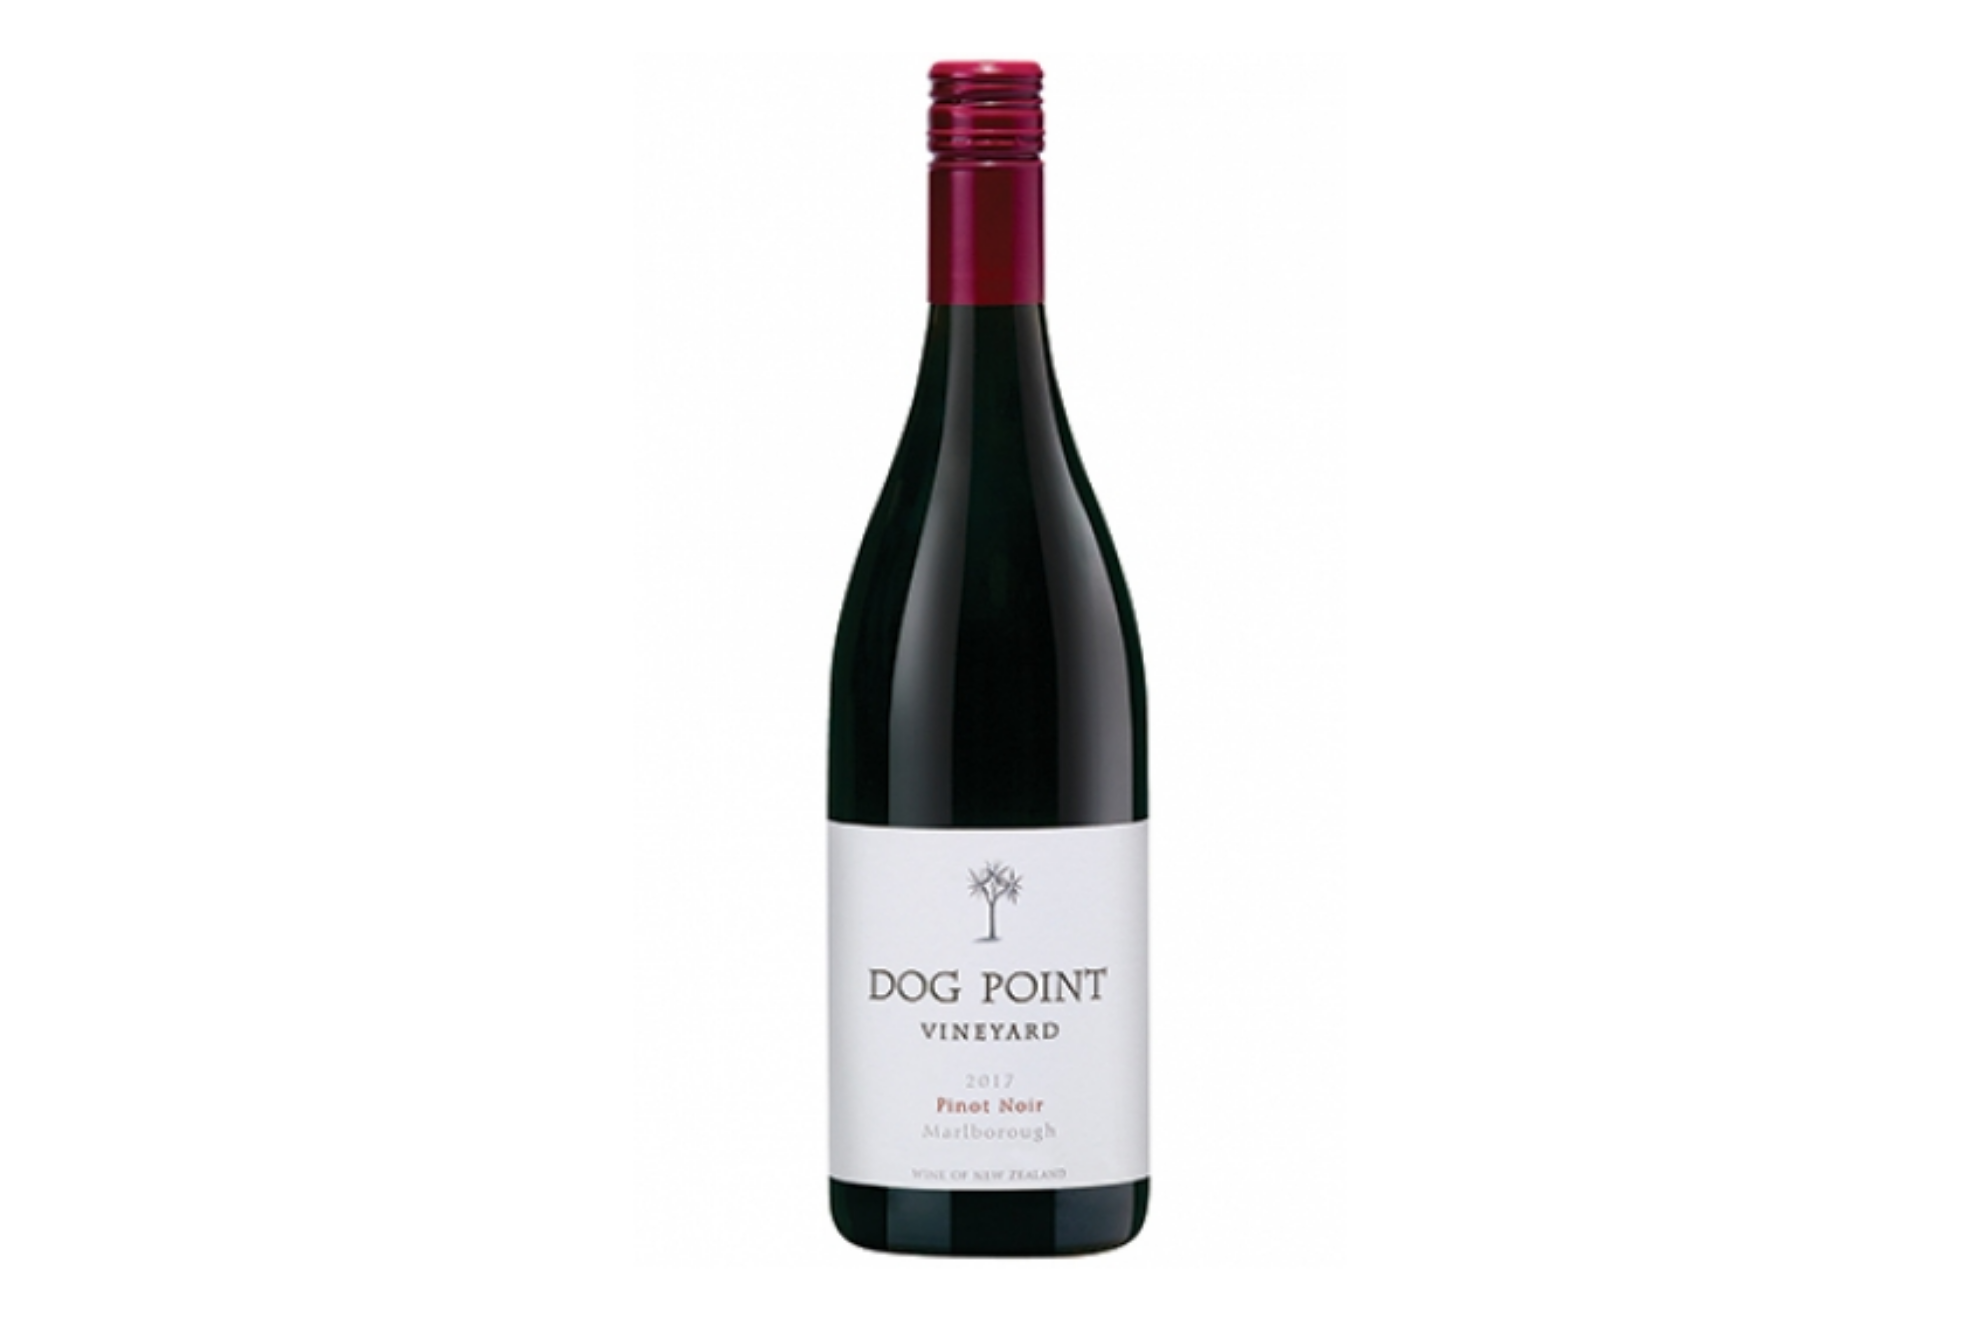 Dog Point Pinot Noir Marlborough 2019